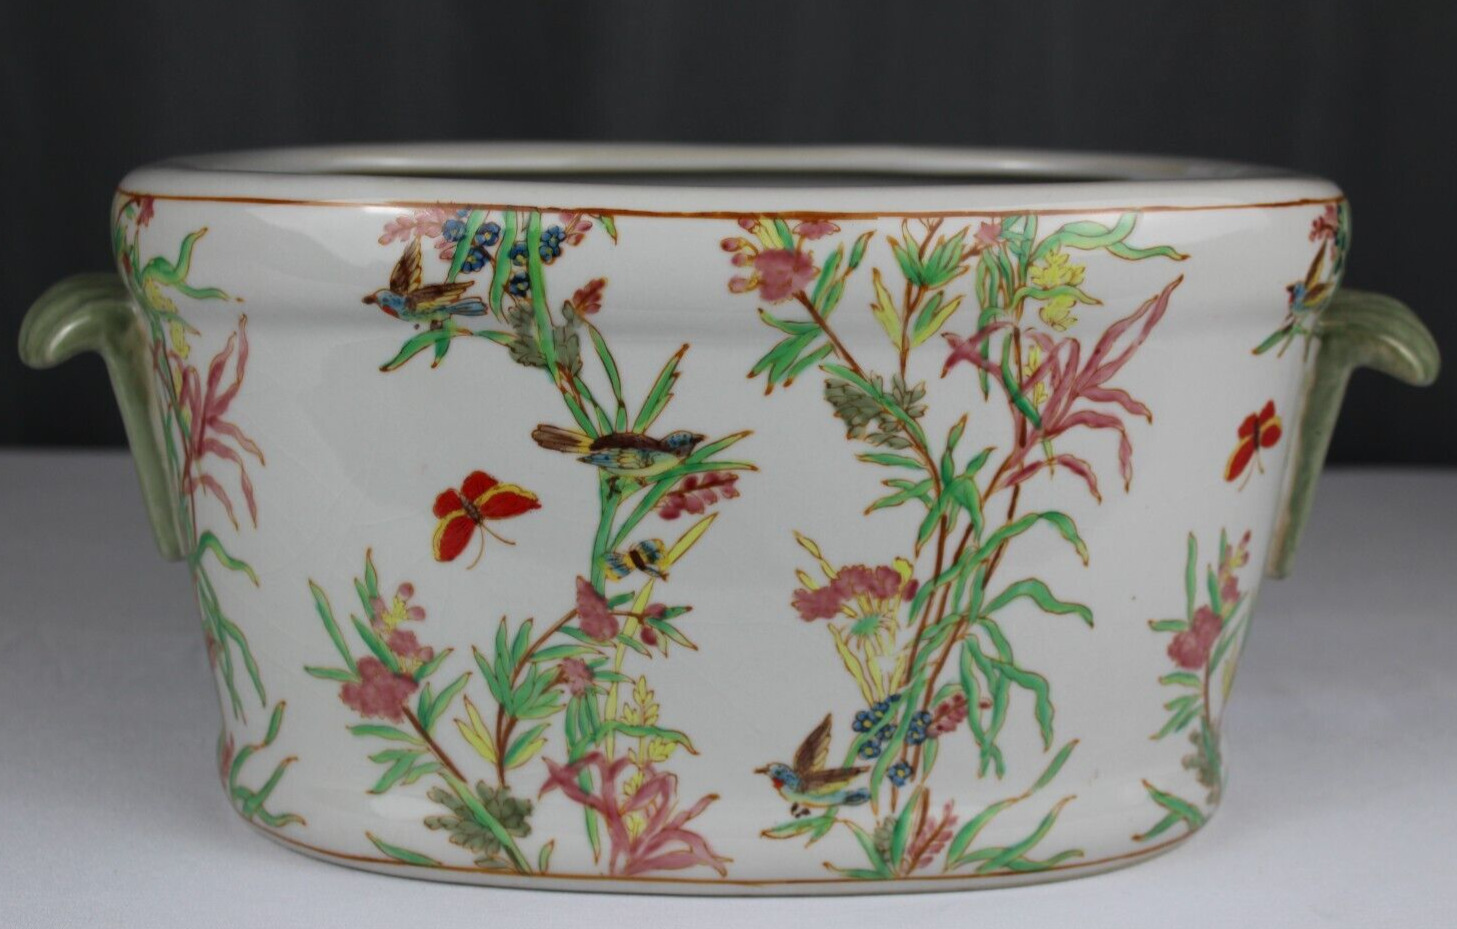 Chinese porcelain foot bath/planter, hand painted flowers, birds, butterflies